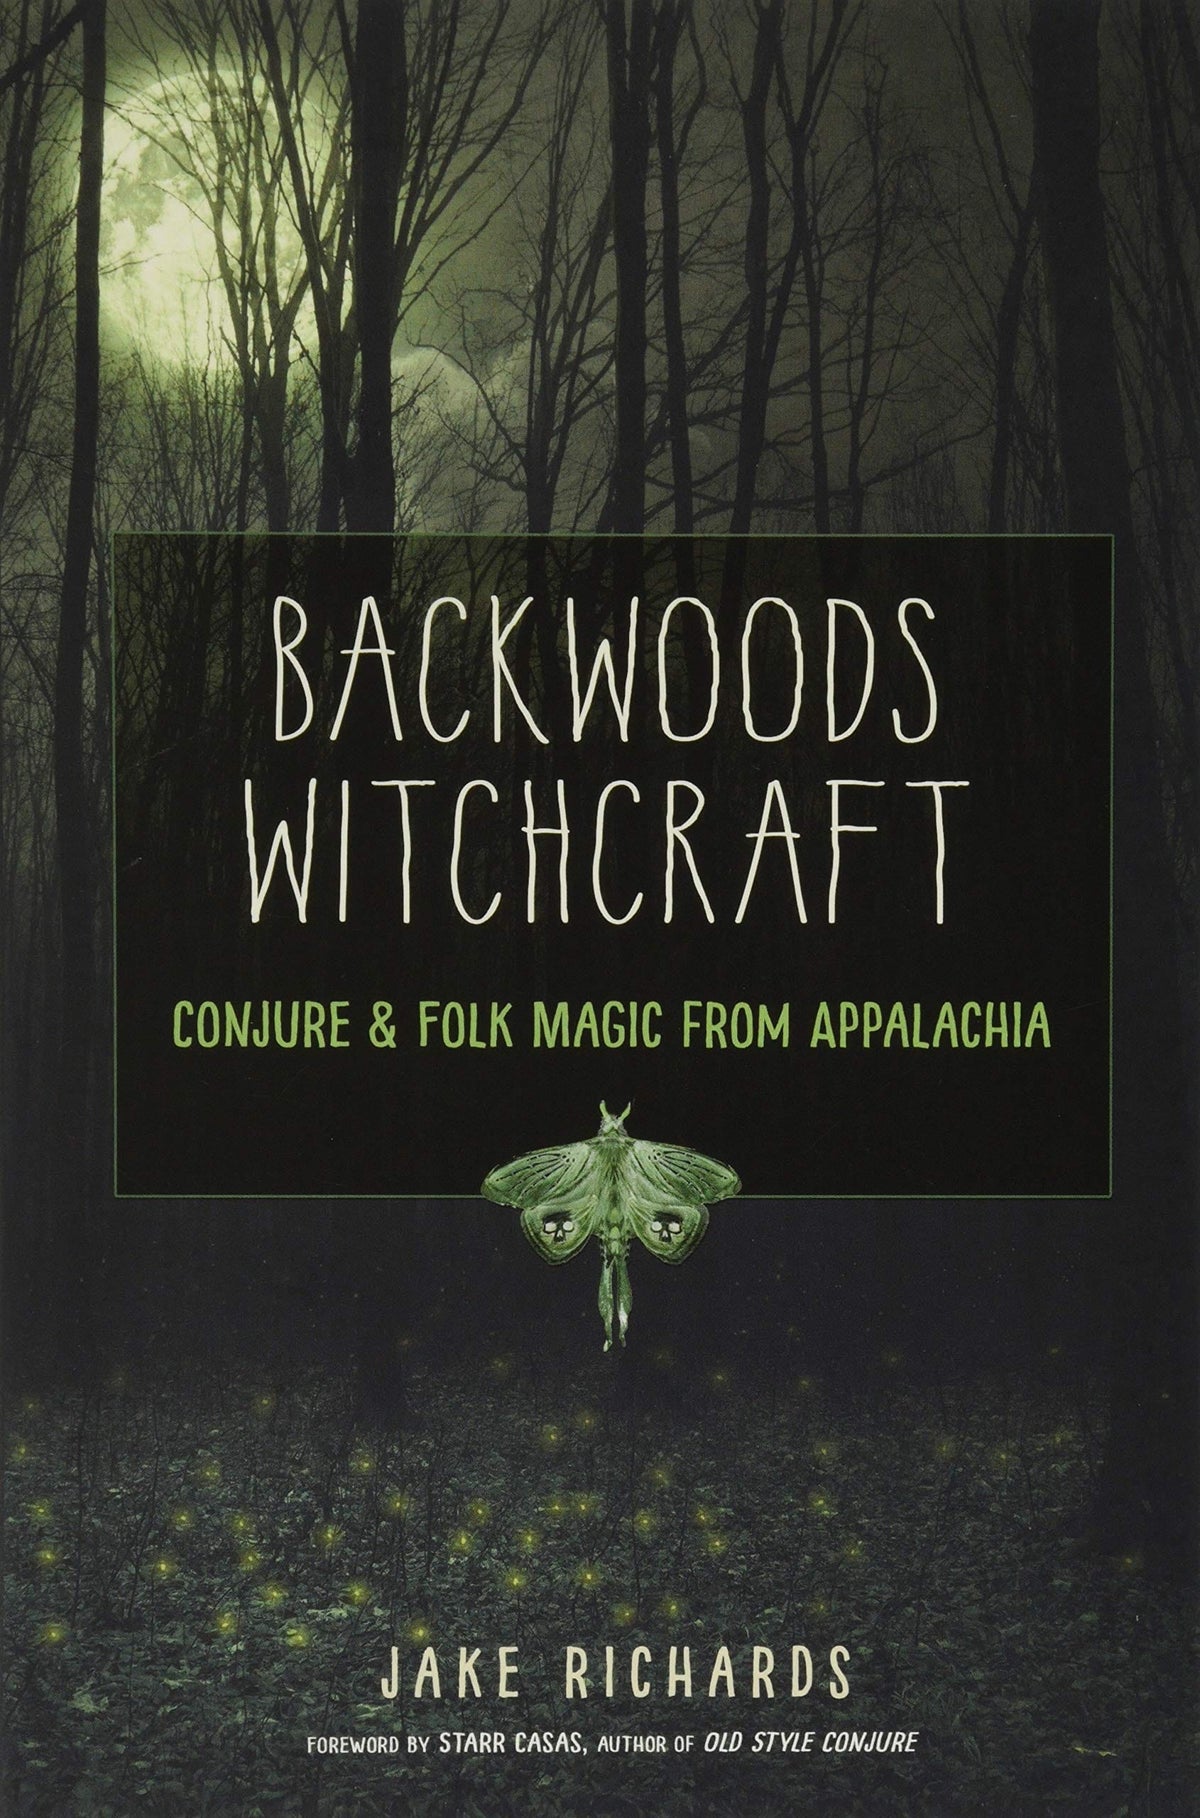 Backwoods Witchcraft: Conjure & Folk Magic from Appalachia - Third Eye